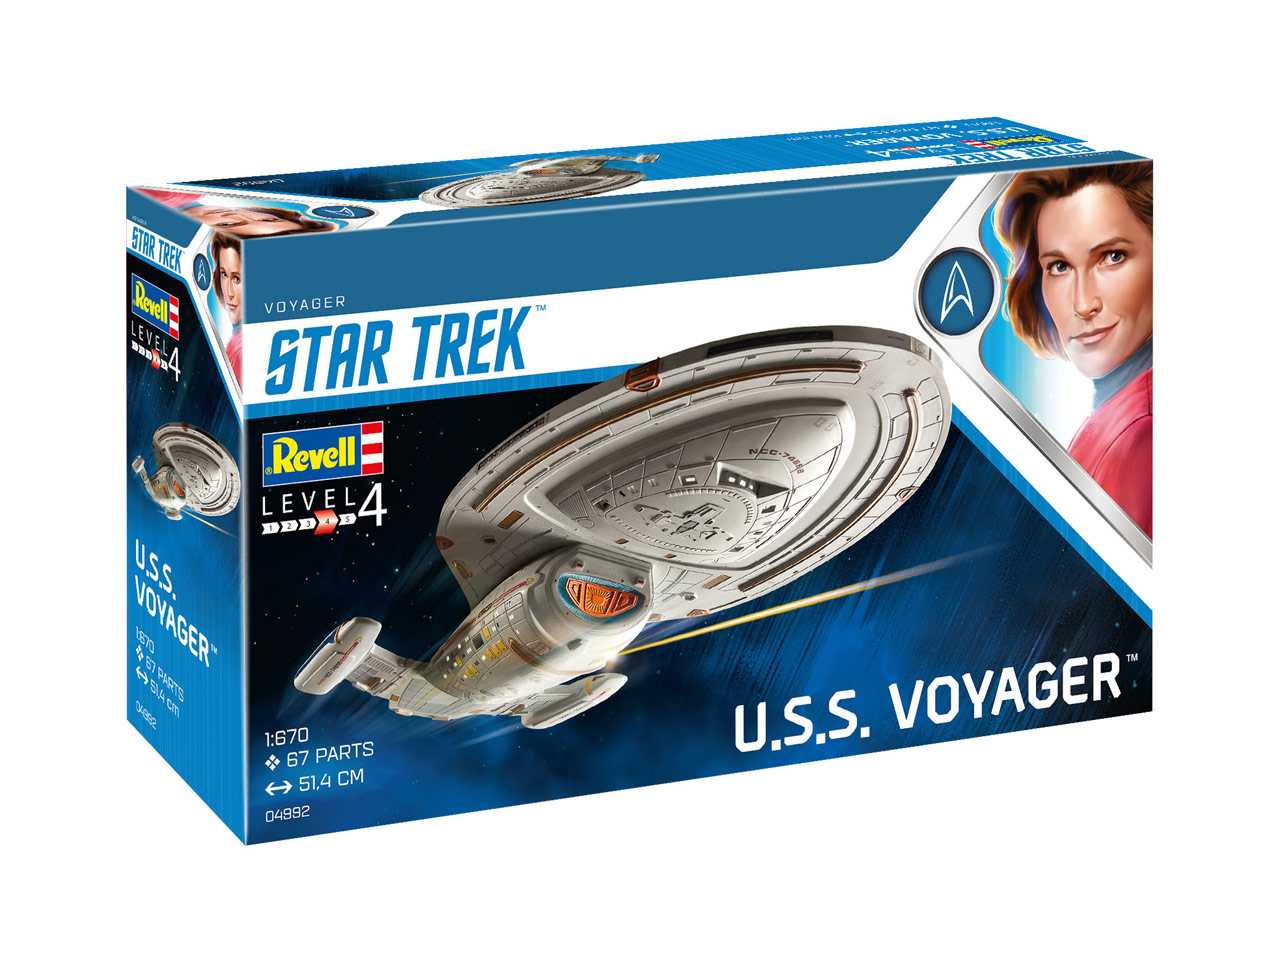 Fotografie Plastic ModelKit Star Trek 04992 - U.S.S. Voyager (1:670)